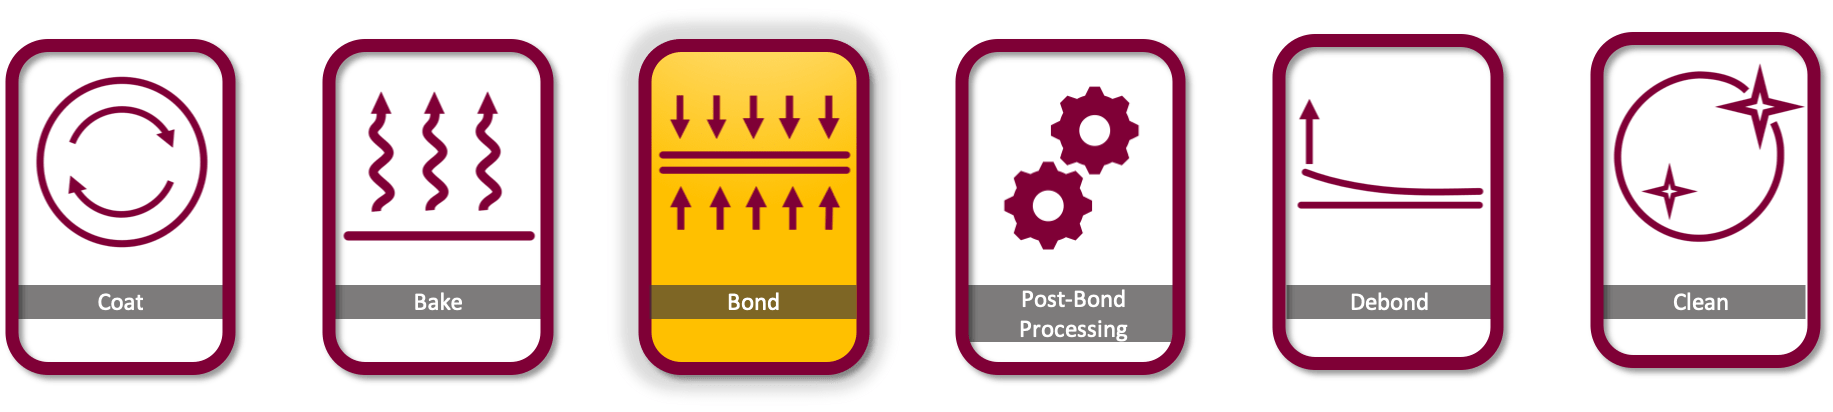 Cee Apogee Wafer Bond Debond Mount Demount Process Flow